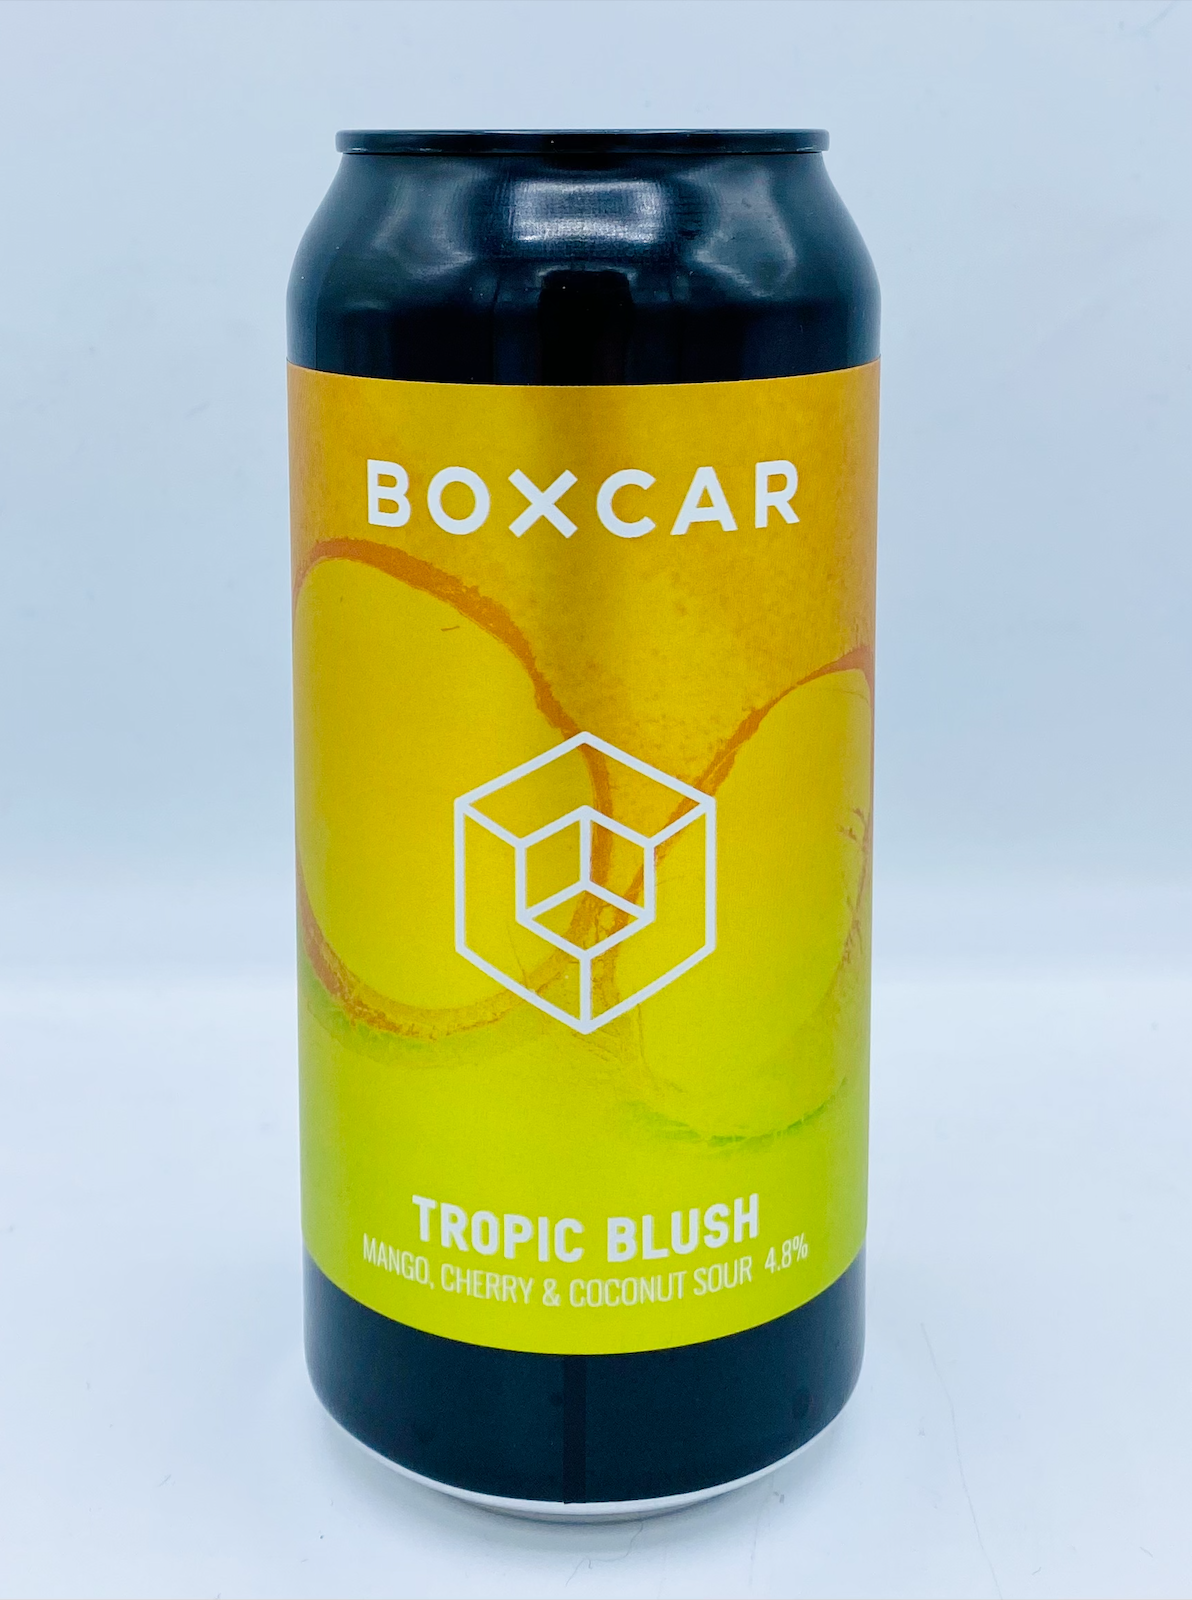 Boxcar - Tropic Blush | Mango, Cherry & Coconut Sour 4.8%